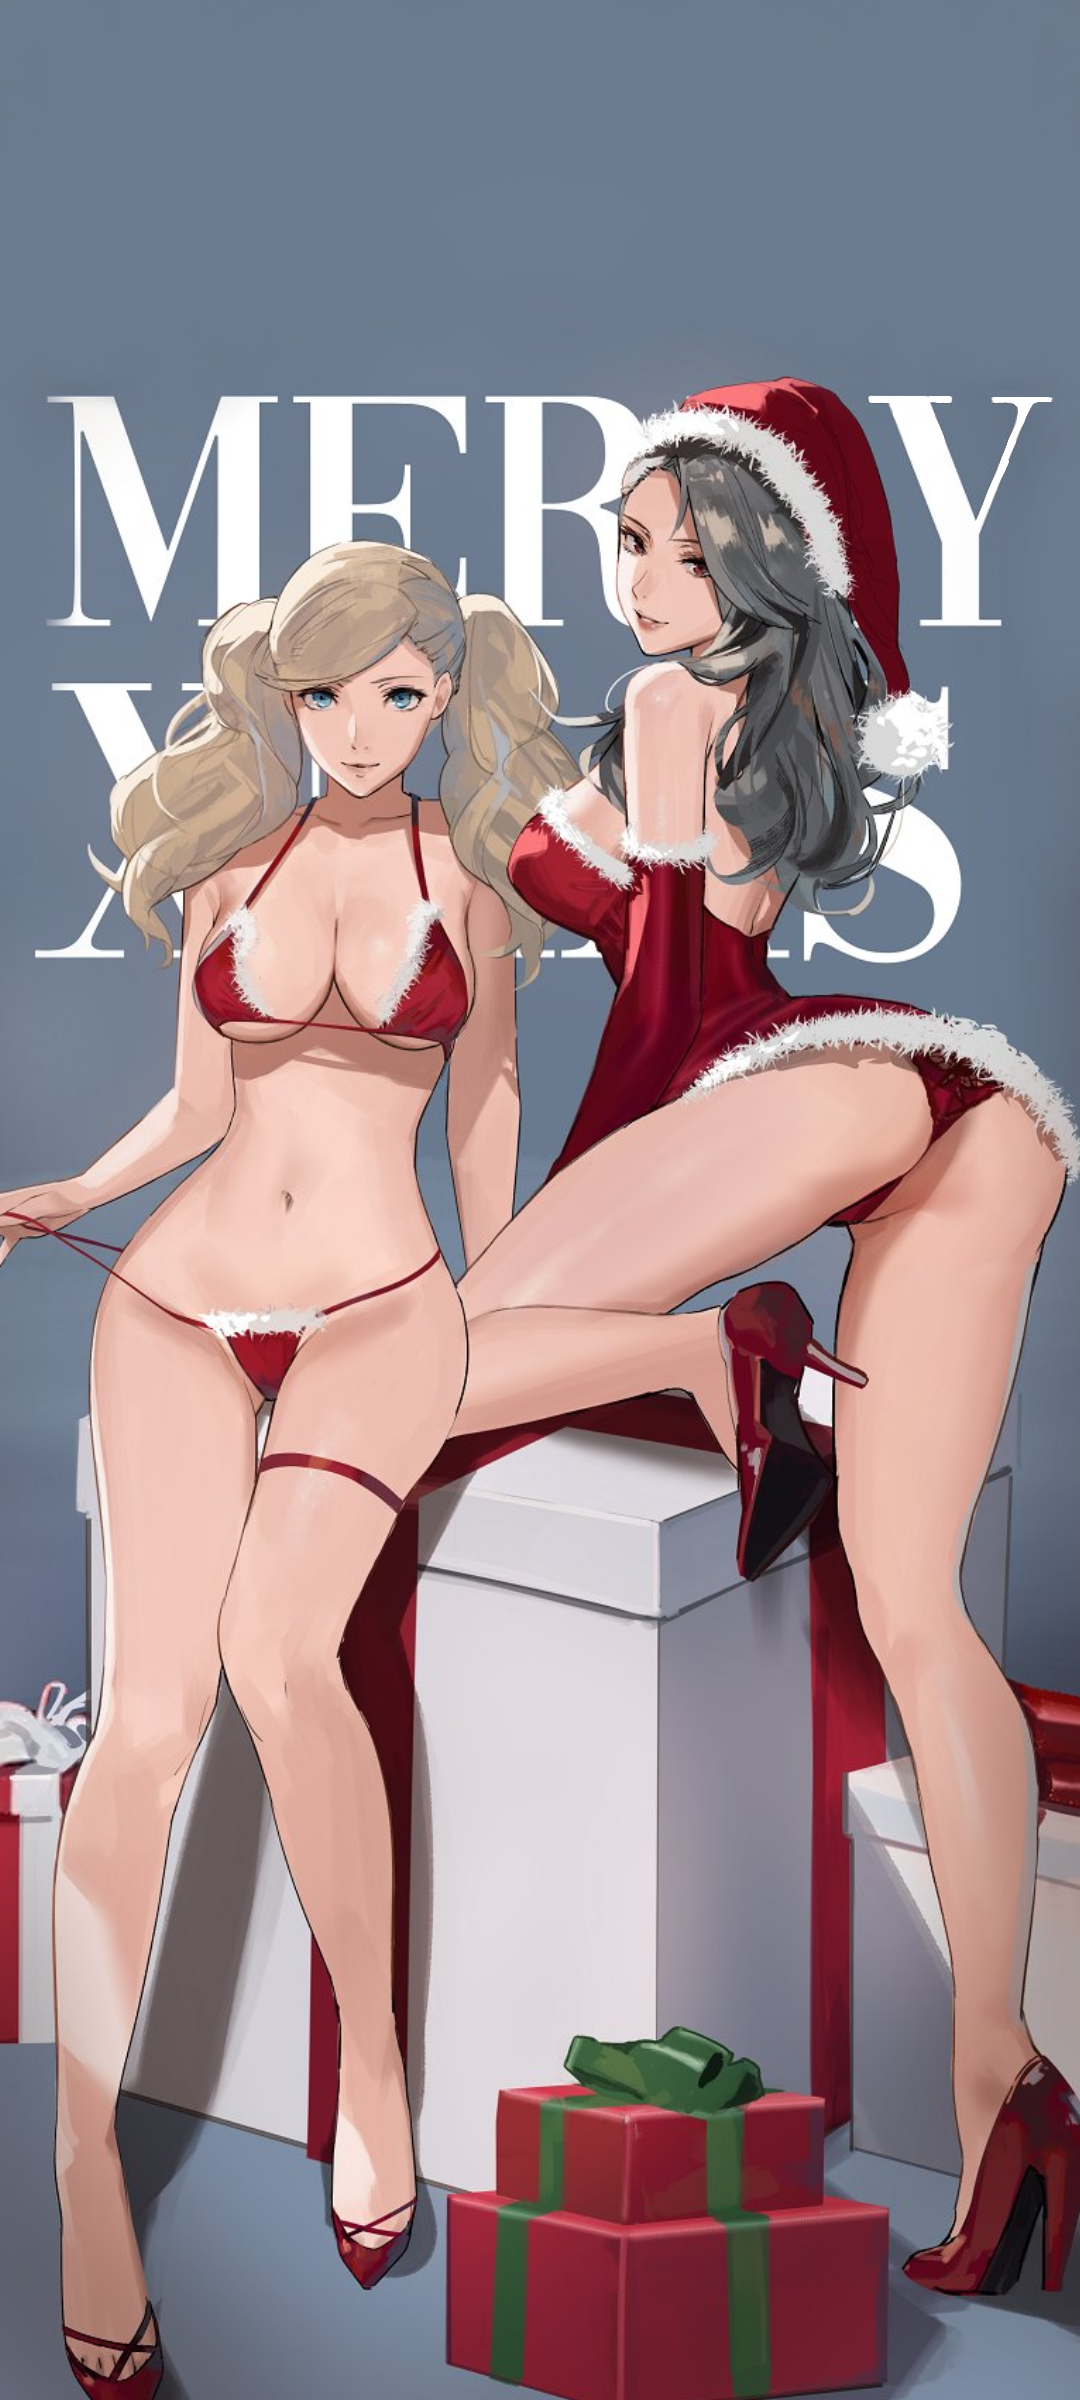 Anime 1080x2400 J@CK Christmas clothes Ann Takamaki  Sae Niijima Persona 5 ass twintails portrait display anime girls underwear Christmas presents Christmas big boobs Santa hats two women